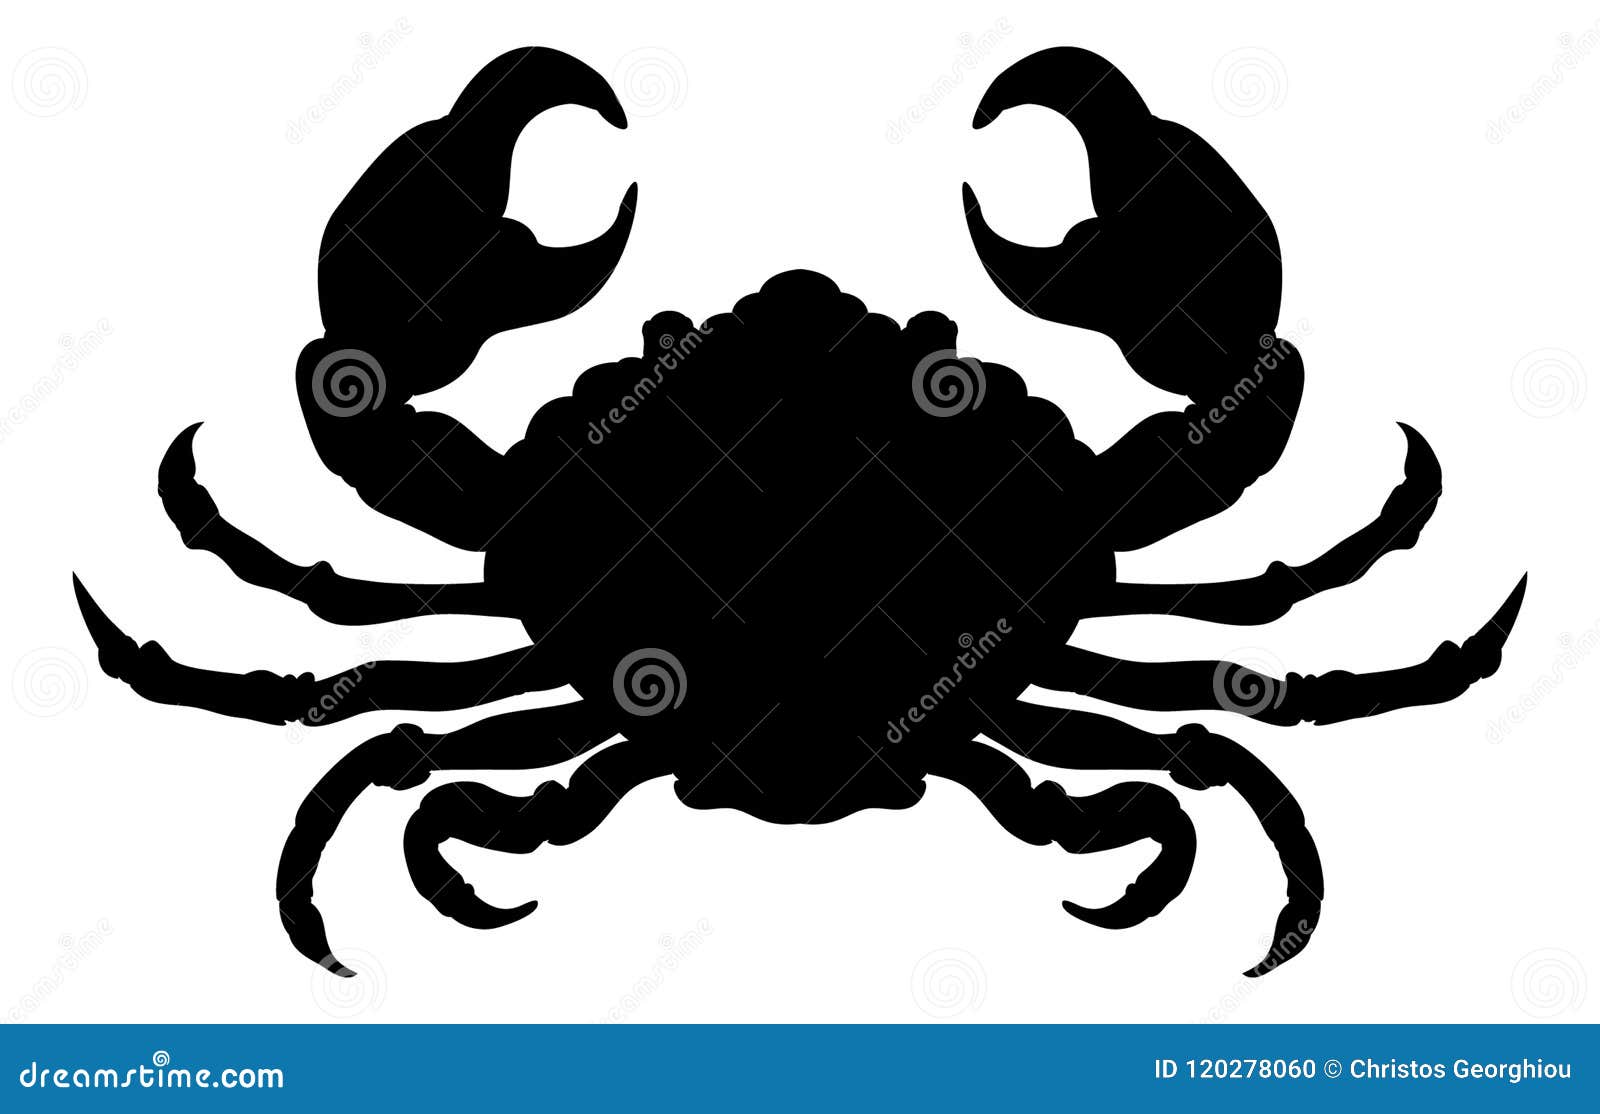 crab animal silhouette